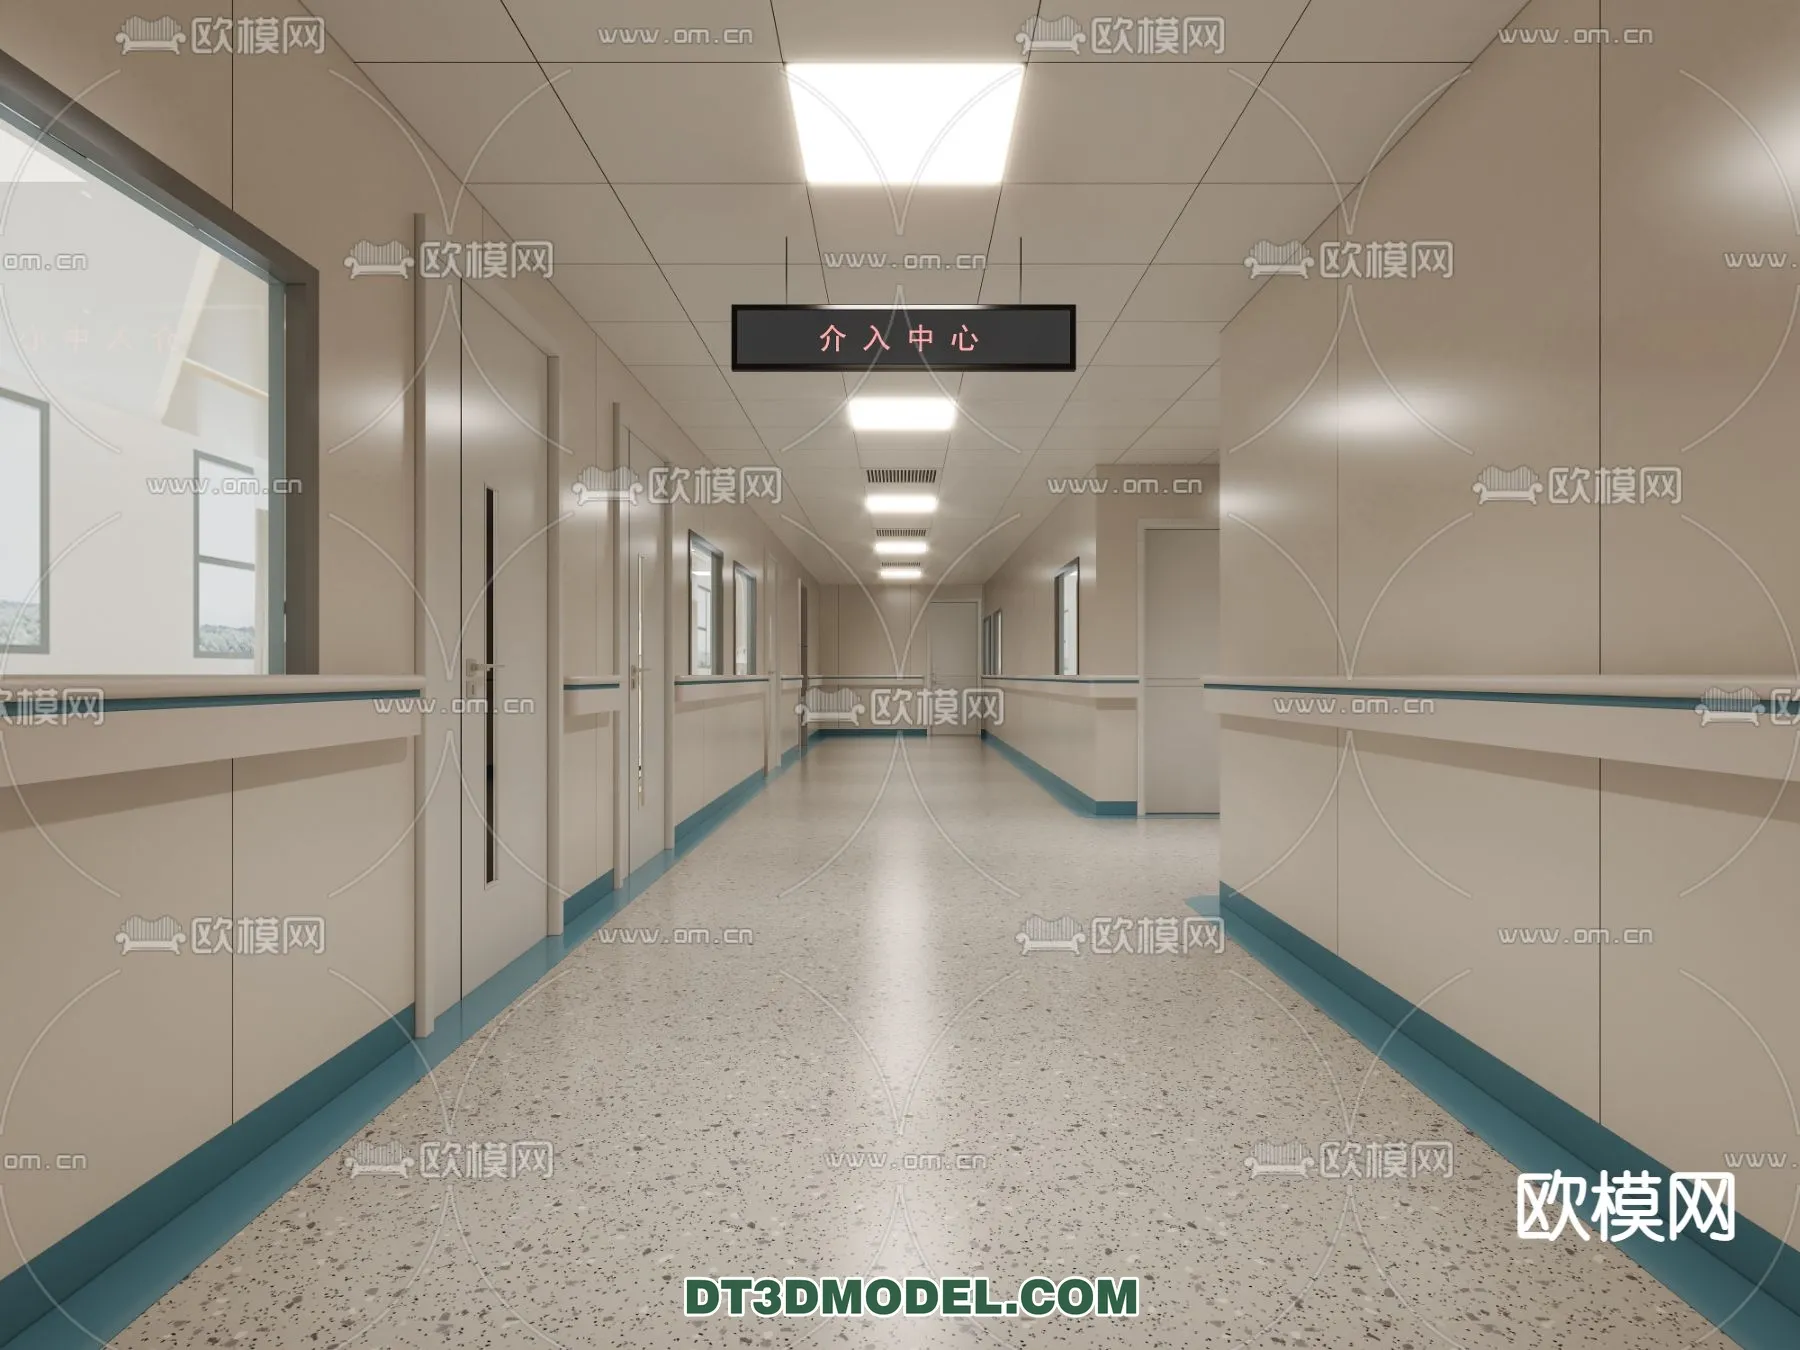 HOSPITAL 3D SCENES – MODERN – 0022